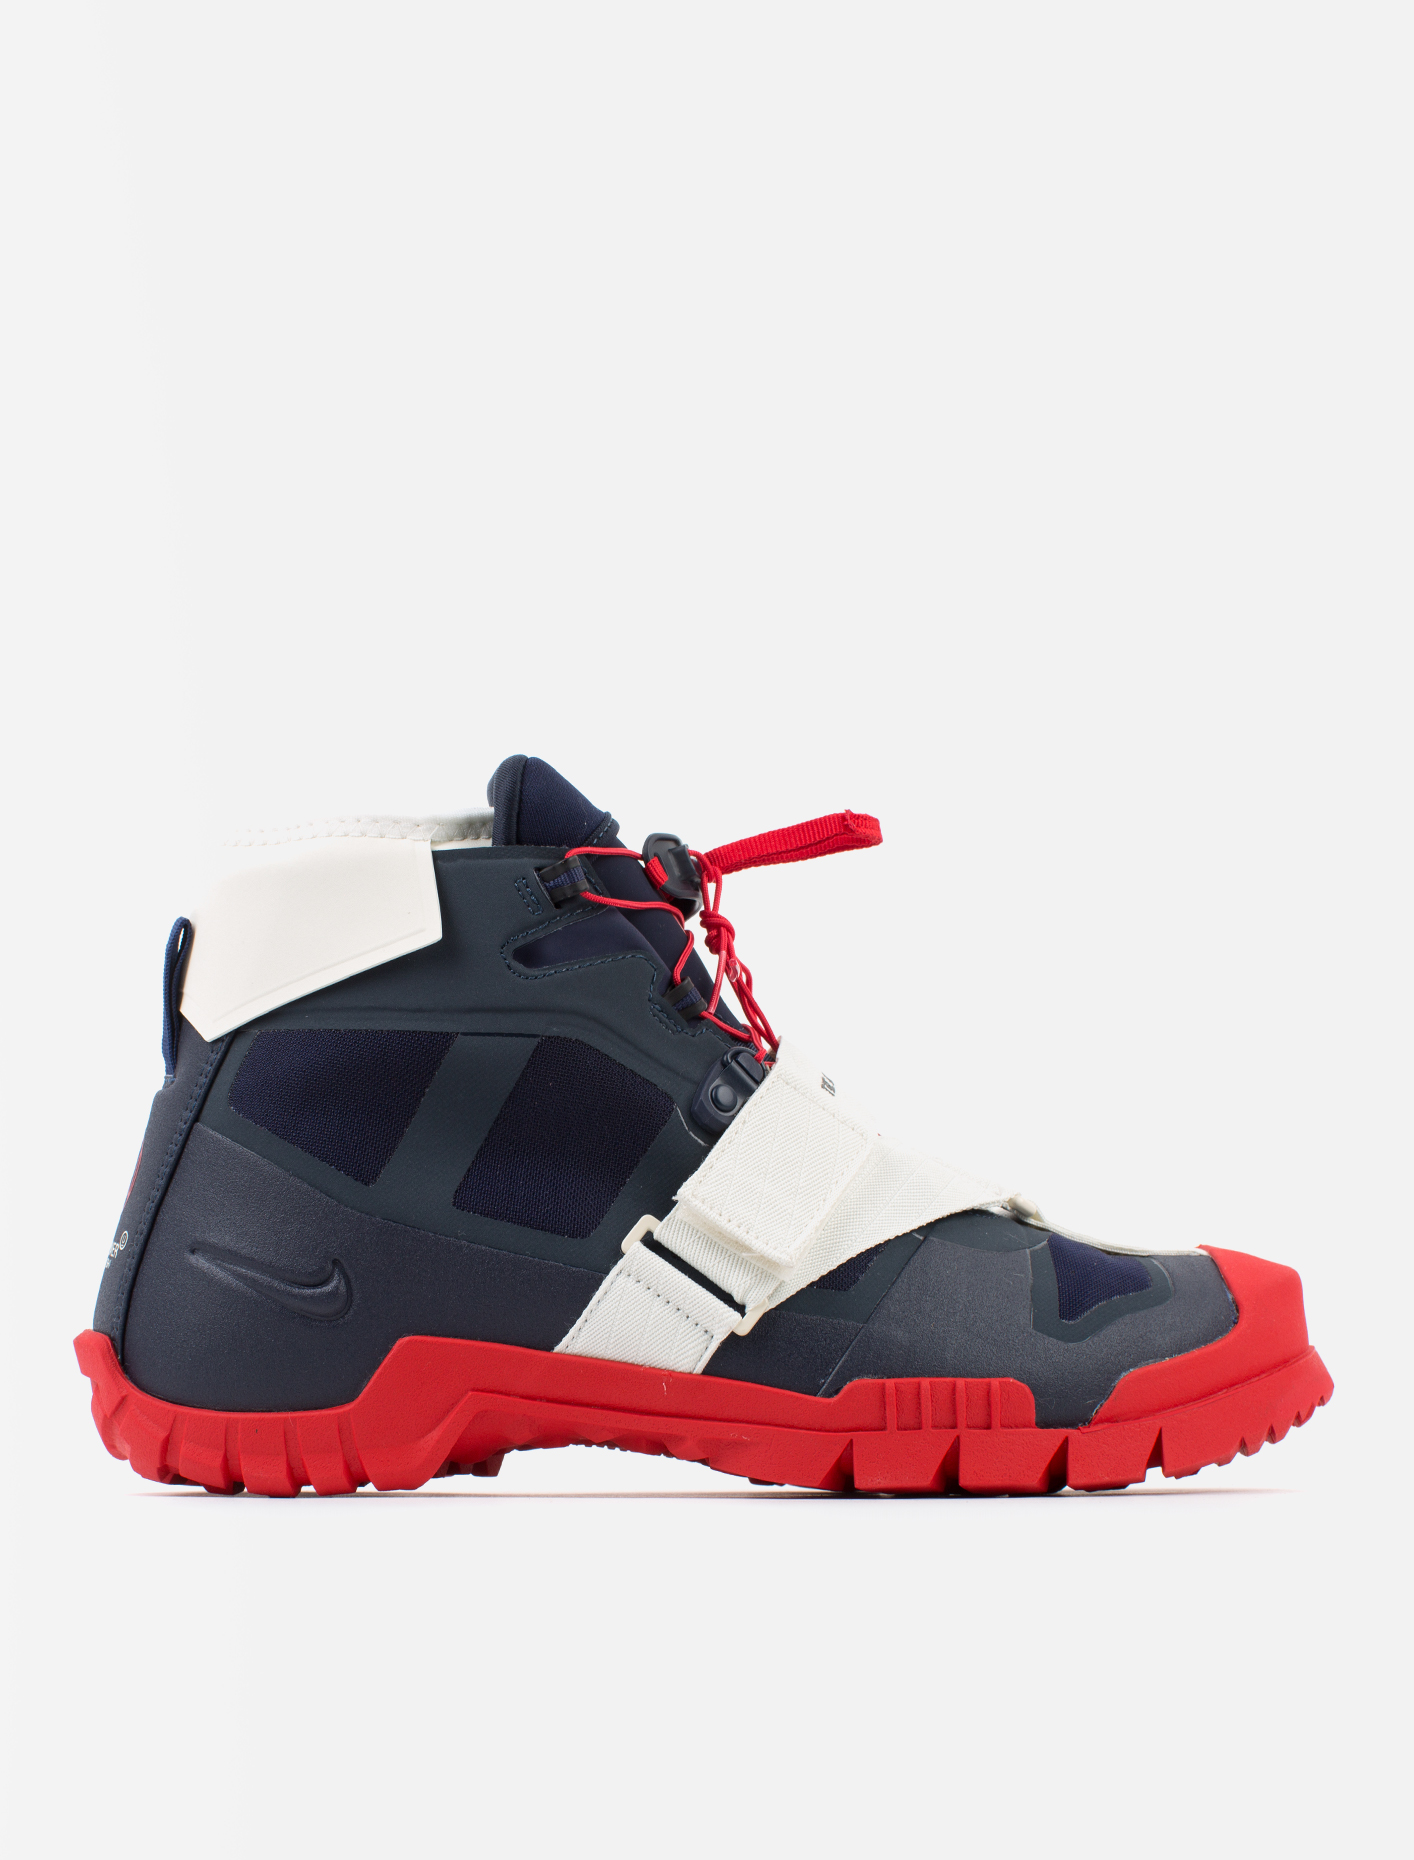 Nike x Undercover SFB Mountain Sneaker 